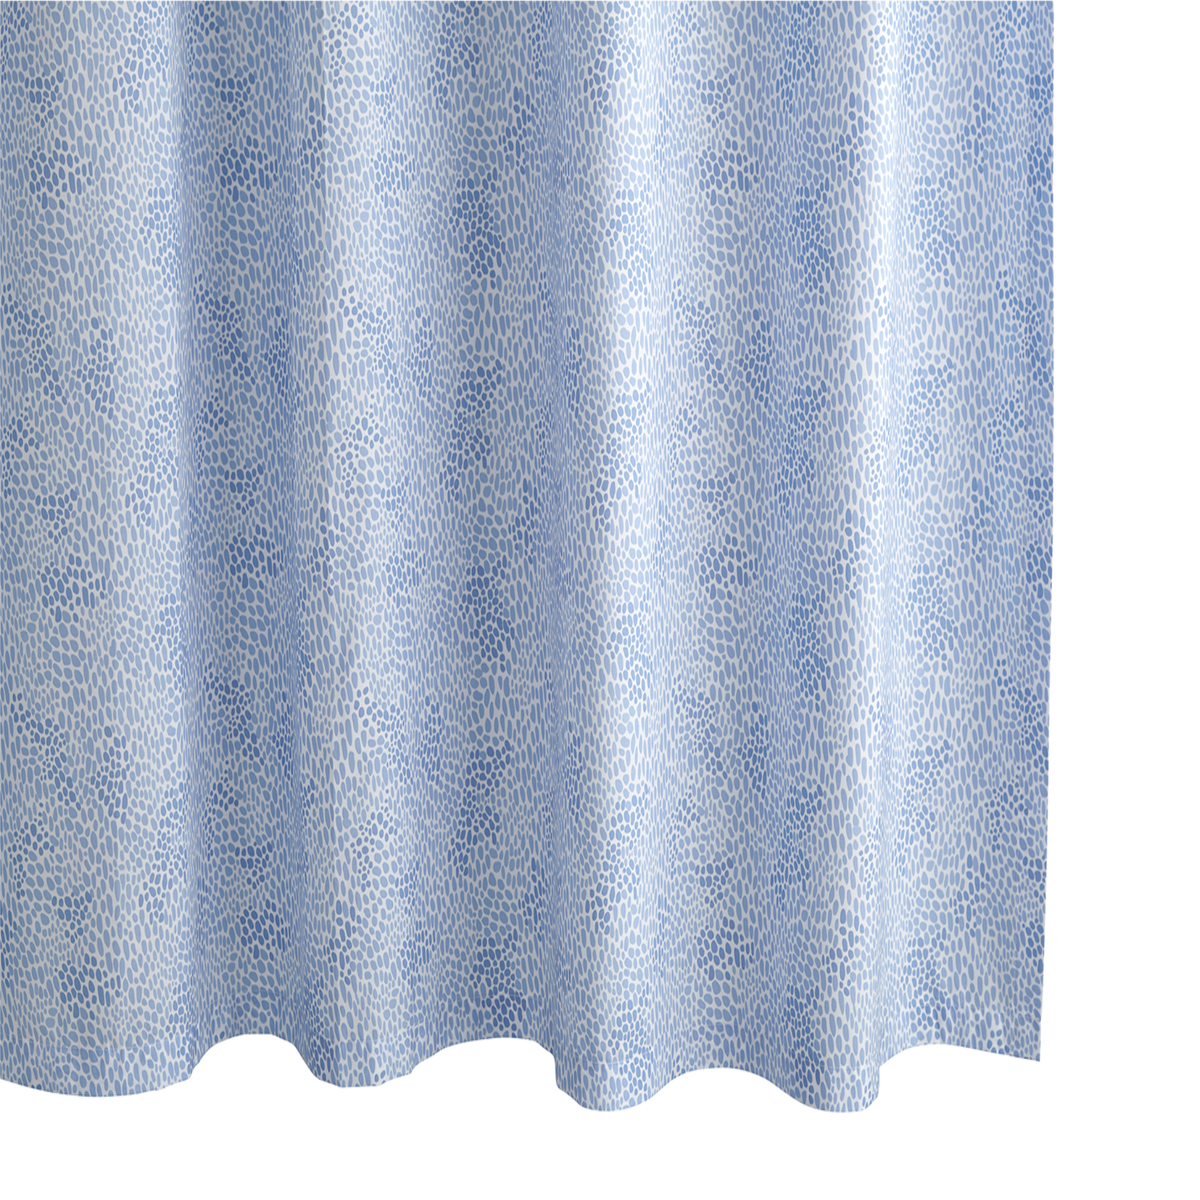 Azure Color Luxury Lulu DK Matouk Nikita Shower Curtain